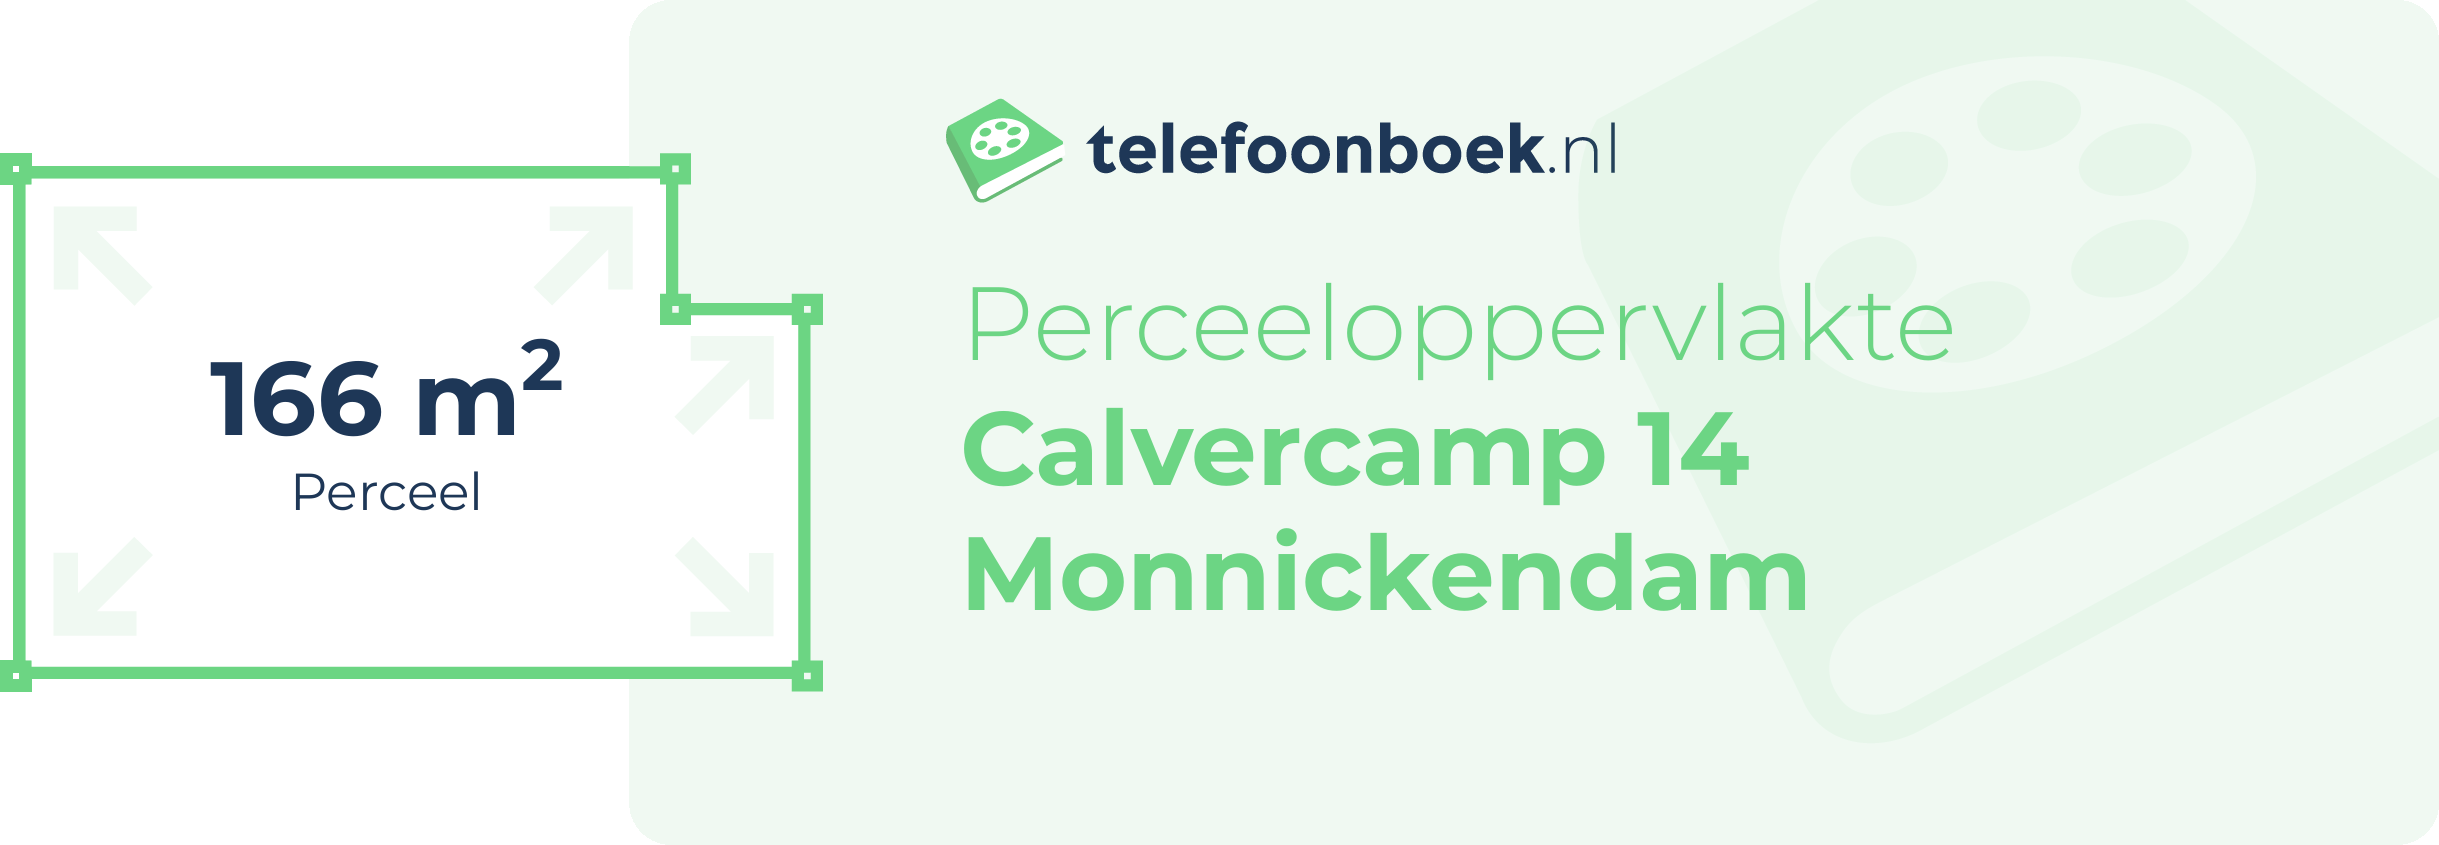 Perceeloppervlakte Calvercamp 14 Monnickendam